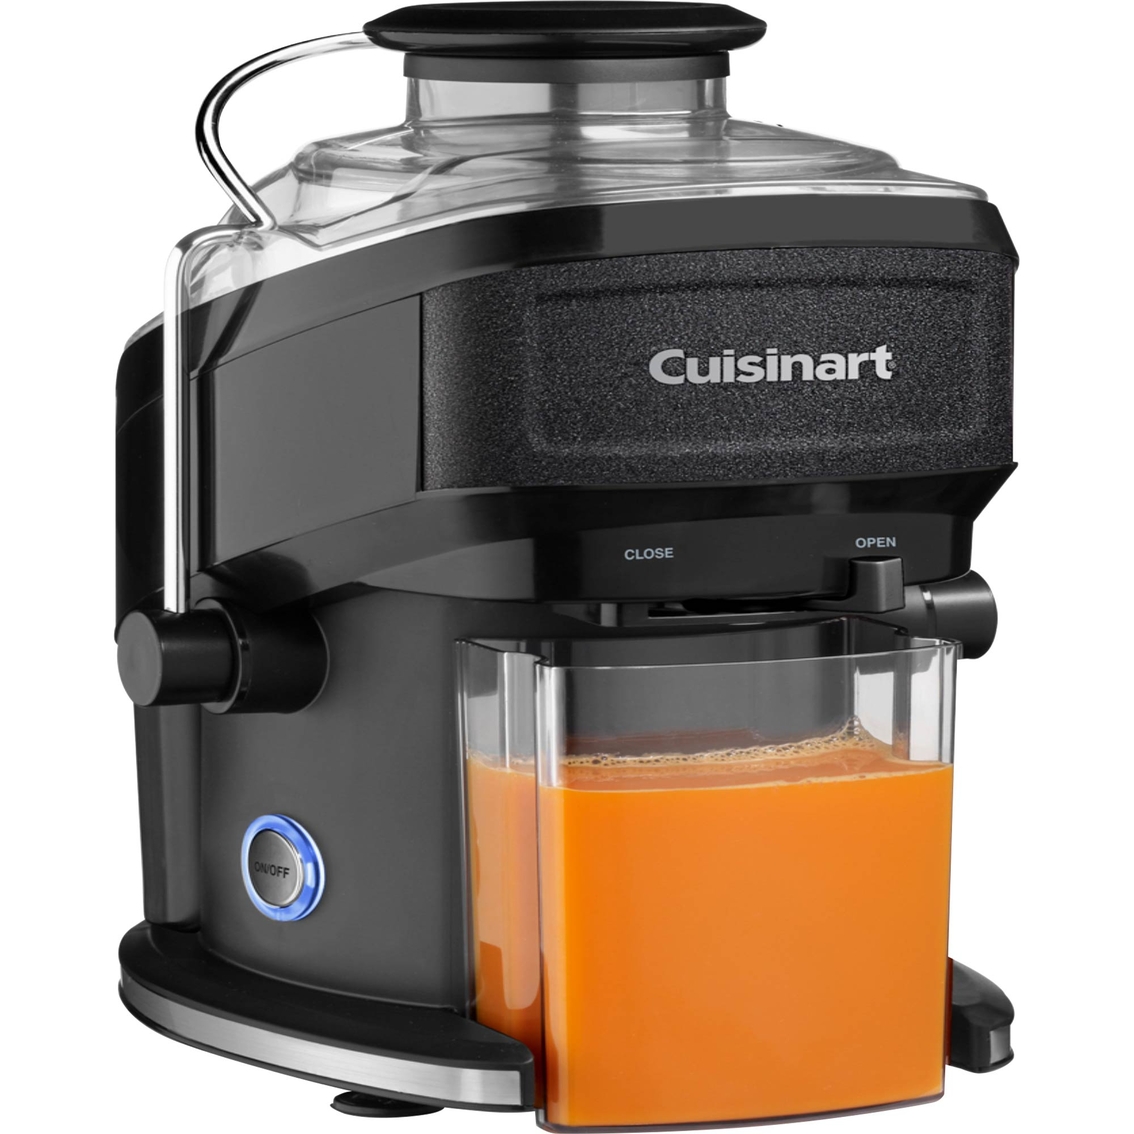 Cuisinart Compact Juice Extractor - Image 4 of 4